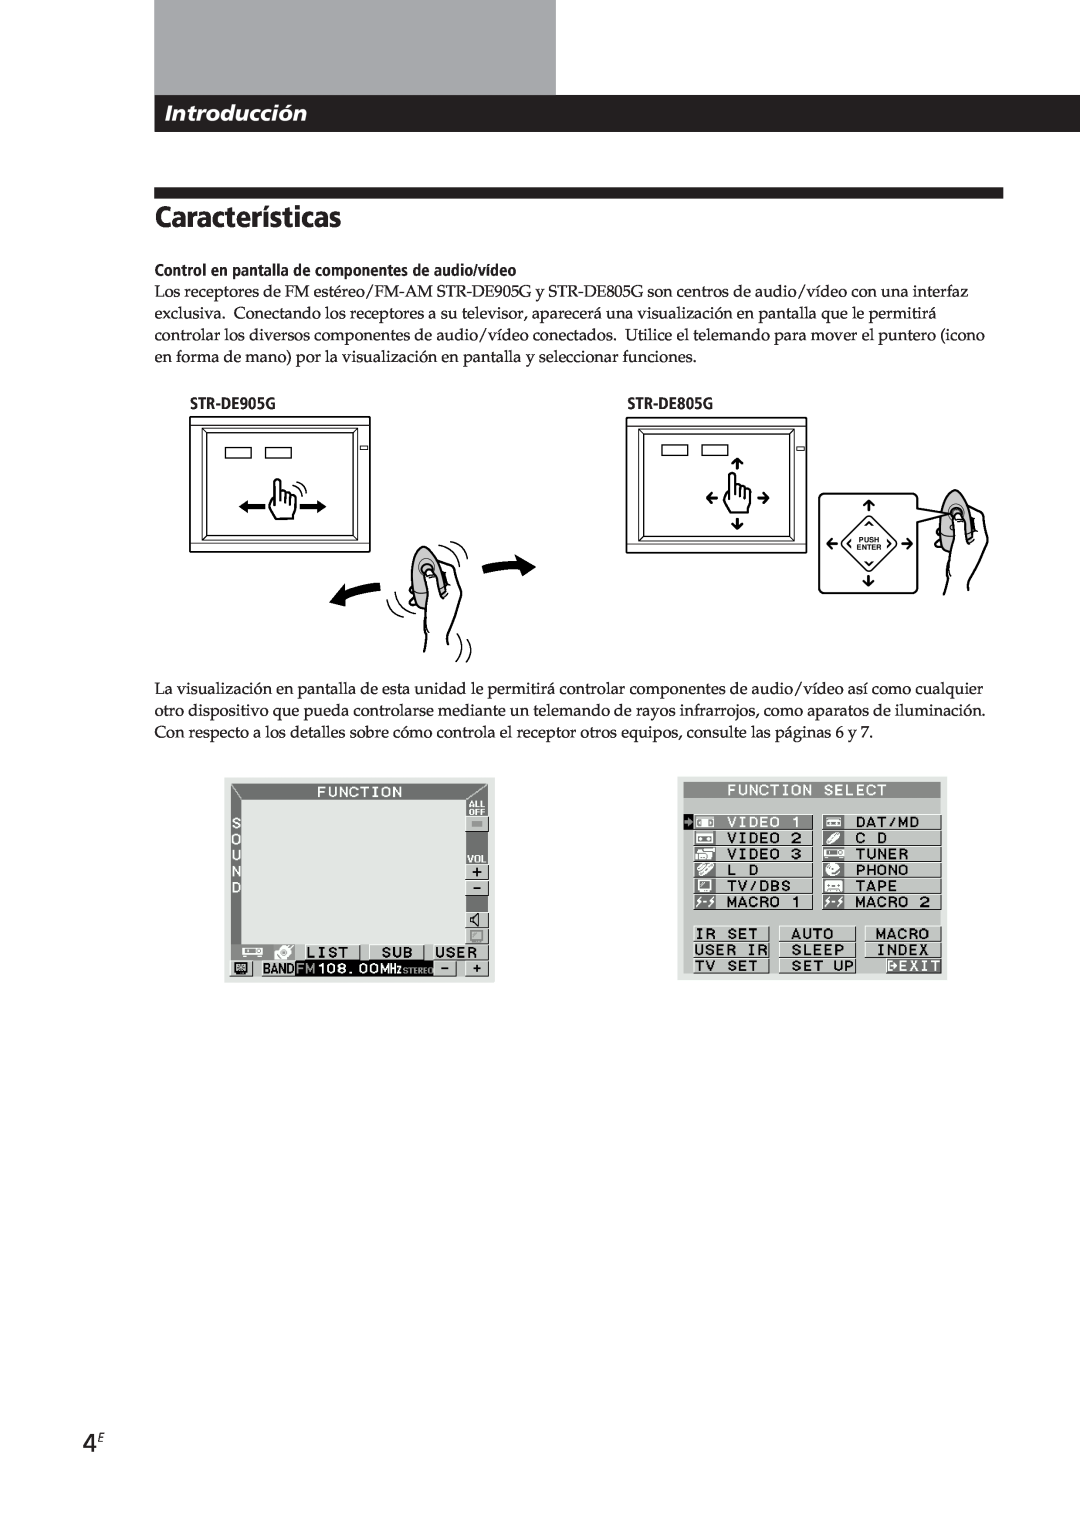 Sony STR-DE905G, STR-DE805G manual Características, Introducción, å Mm µ, Control en pantalla de componentes de audio/vídeo 